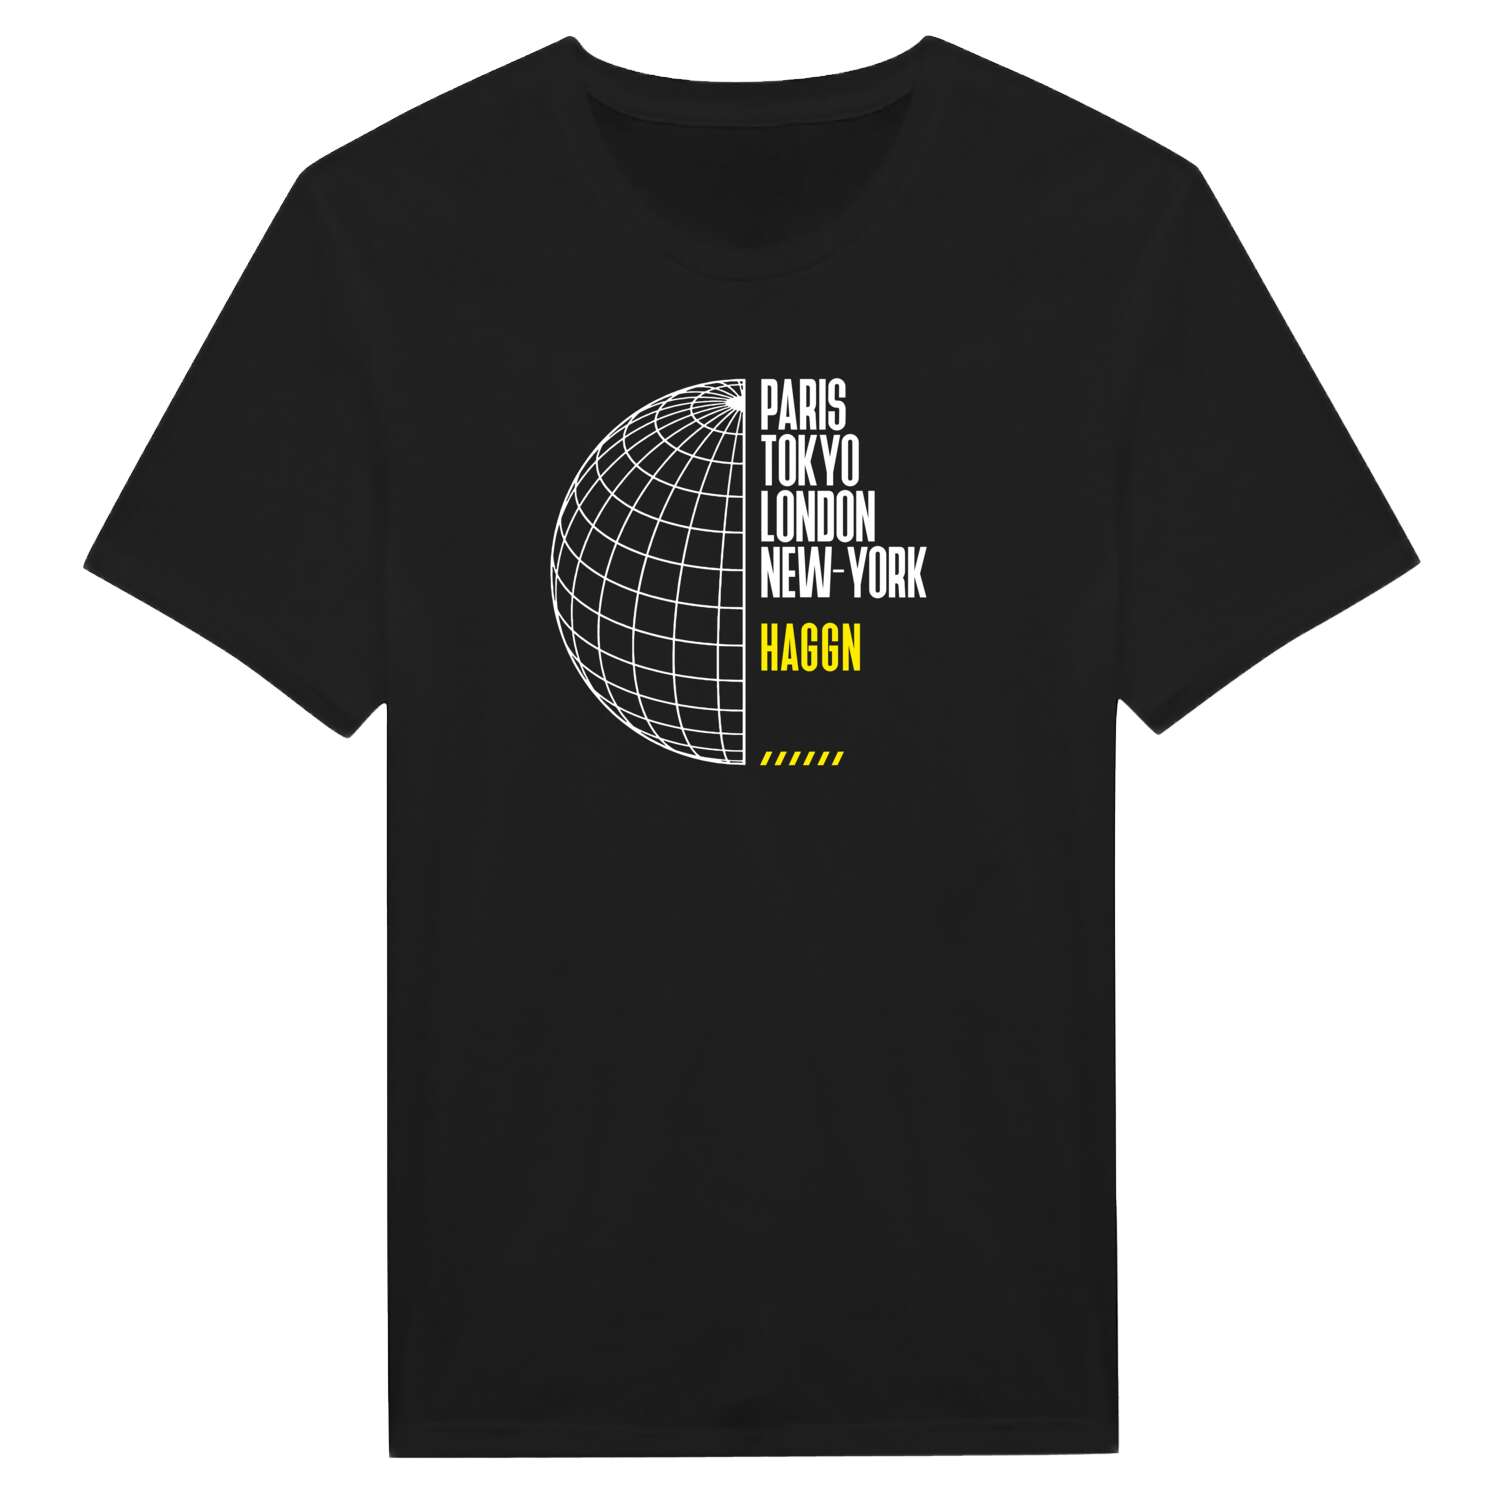 Haggn T-Shirt »Paris Tokyo London«